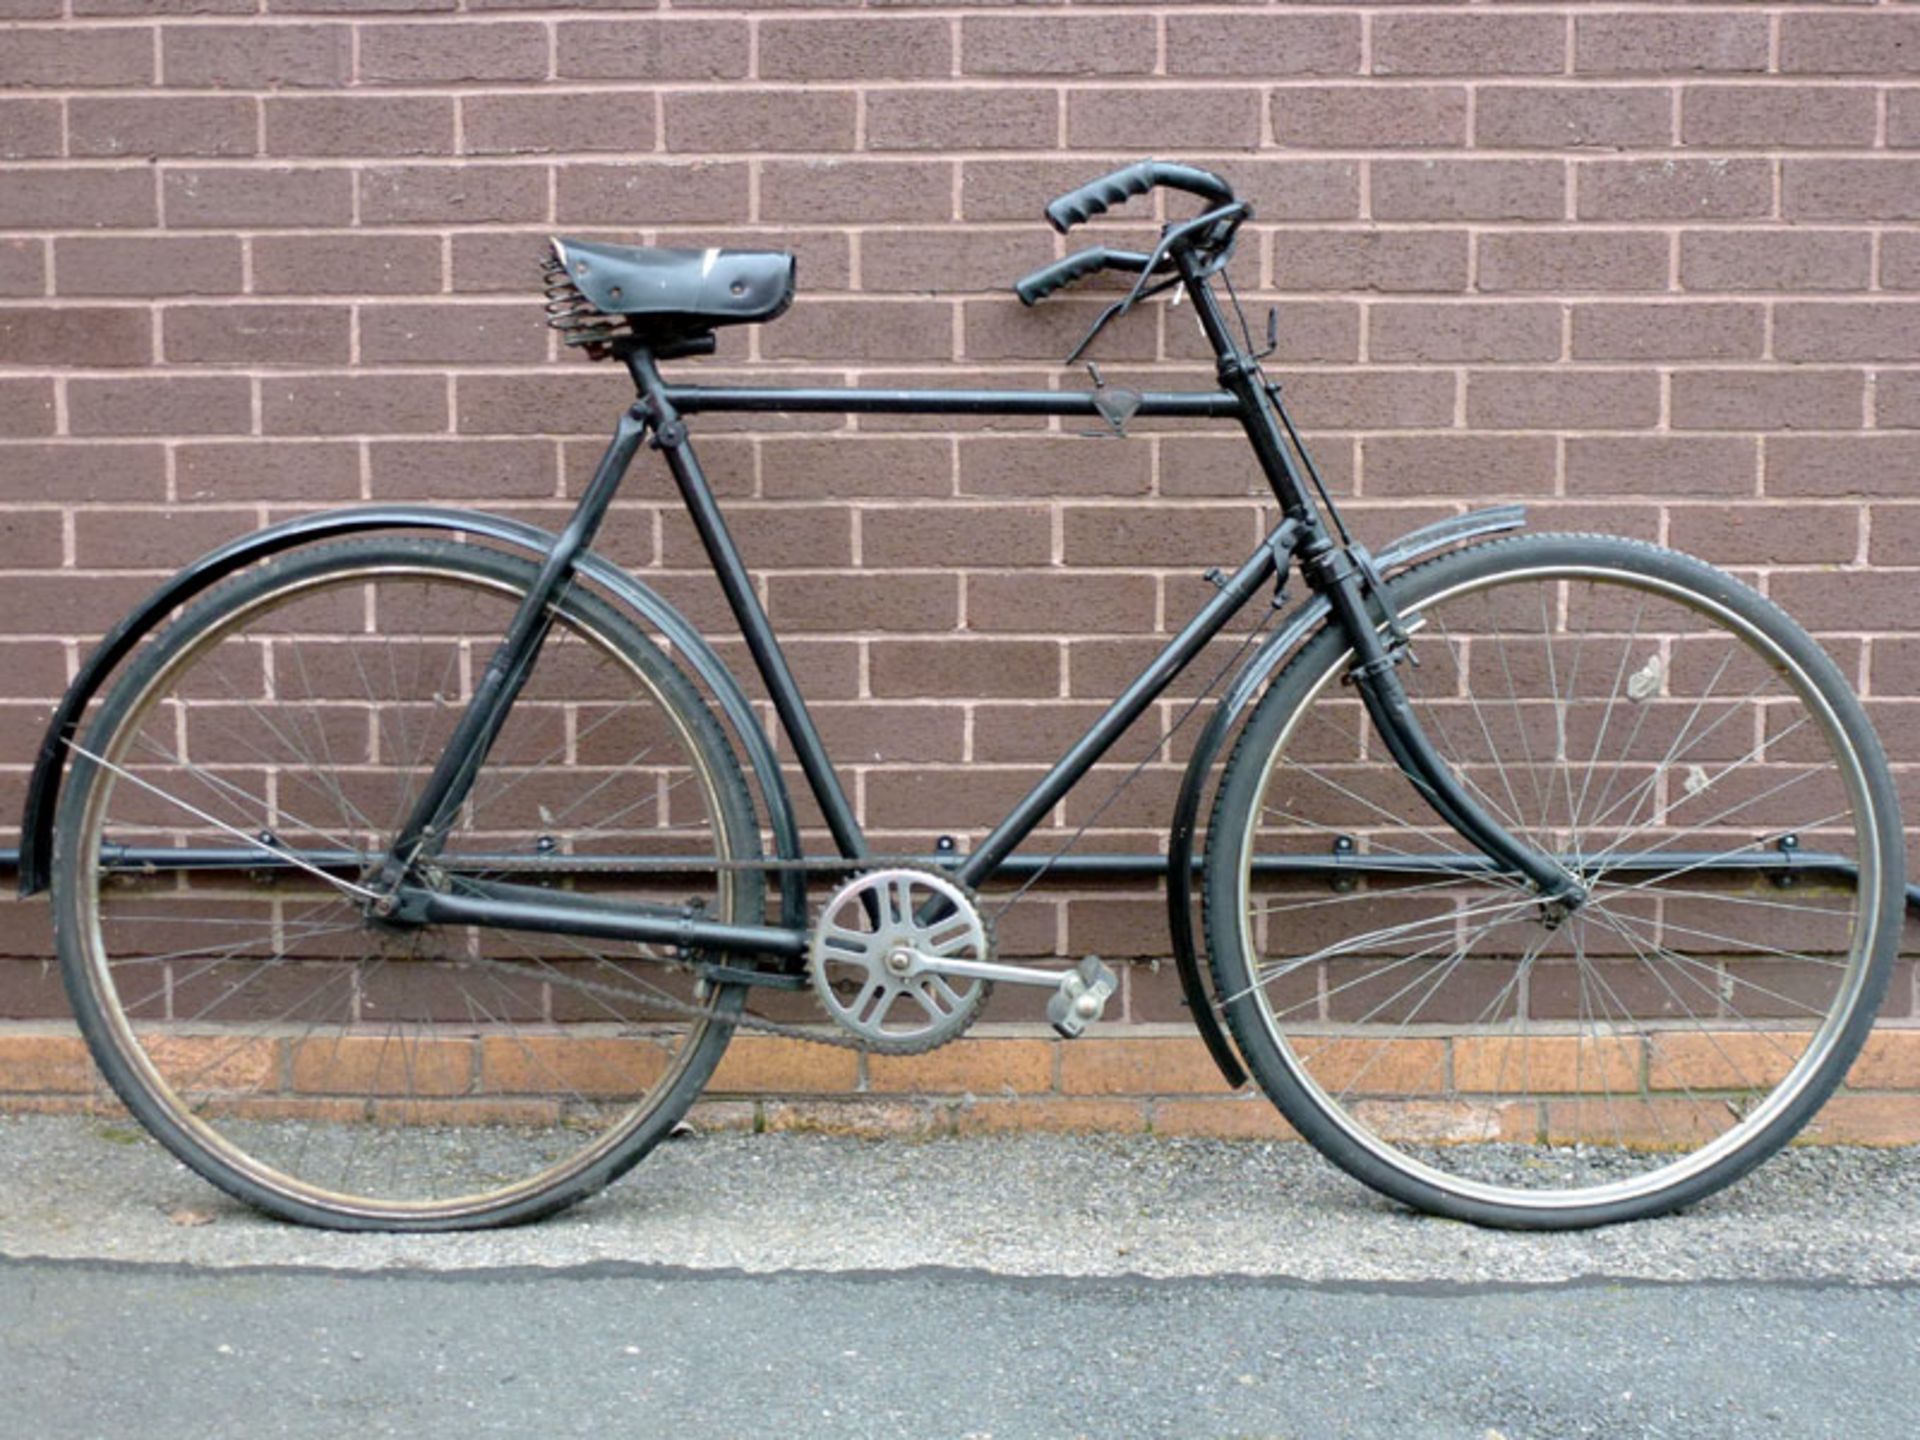 c1934 Gentleman's Roadster Bicycle - Image 2 of 2